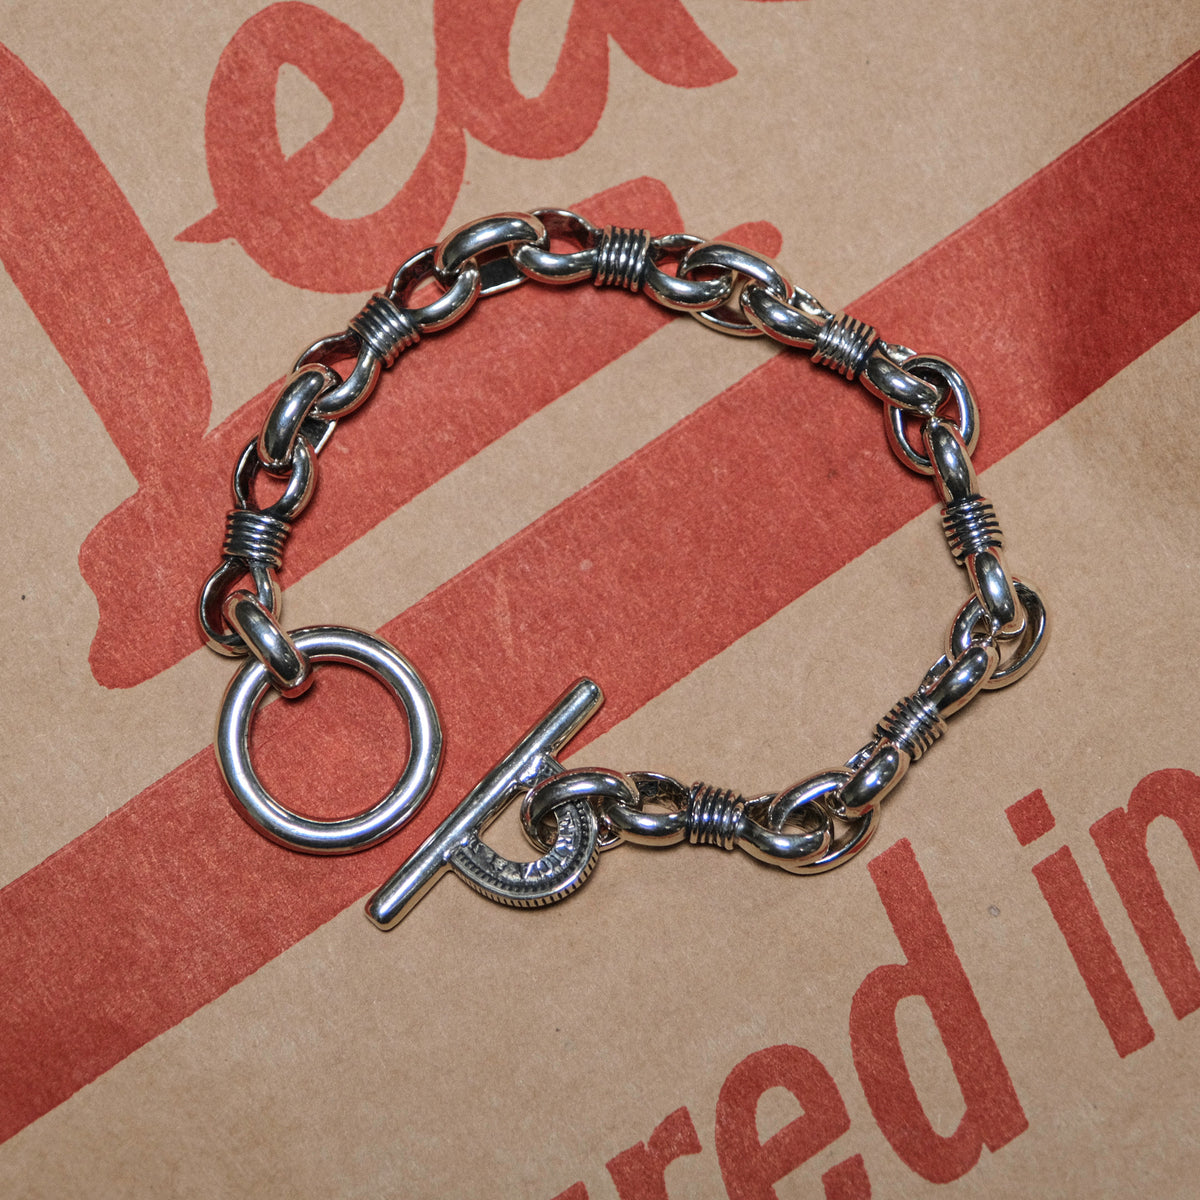 Larry Smith Luck Chain Bracelet